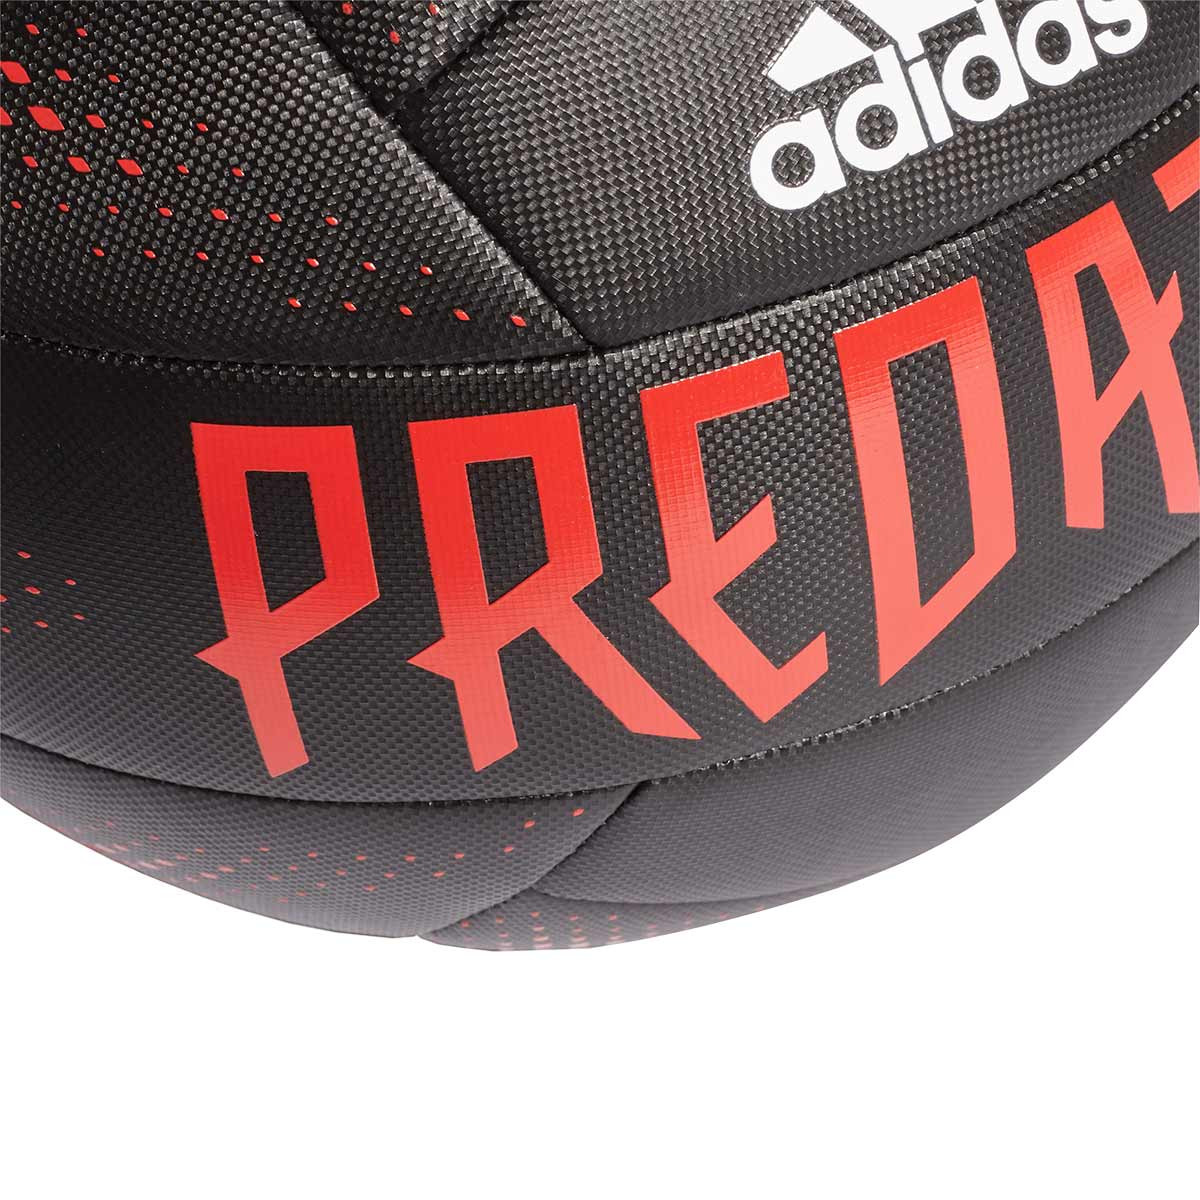 Ball adidas Predator Training Black-Active red-White - Football store  Fútbol Emotion